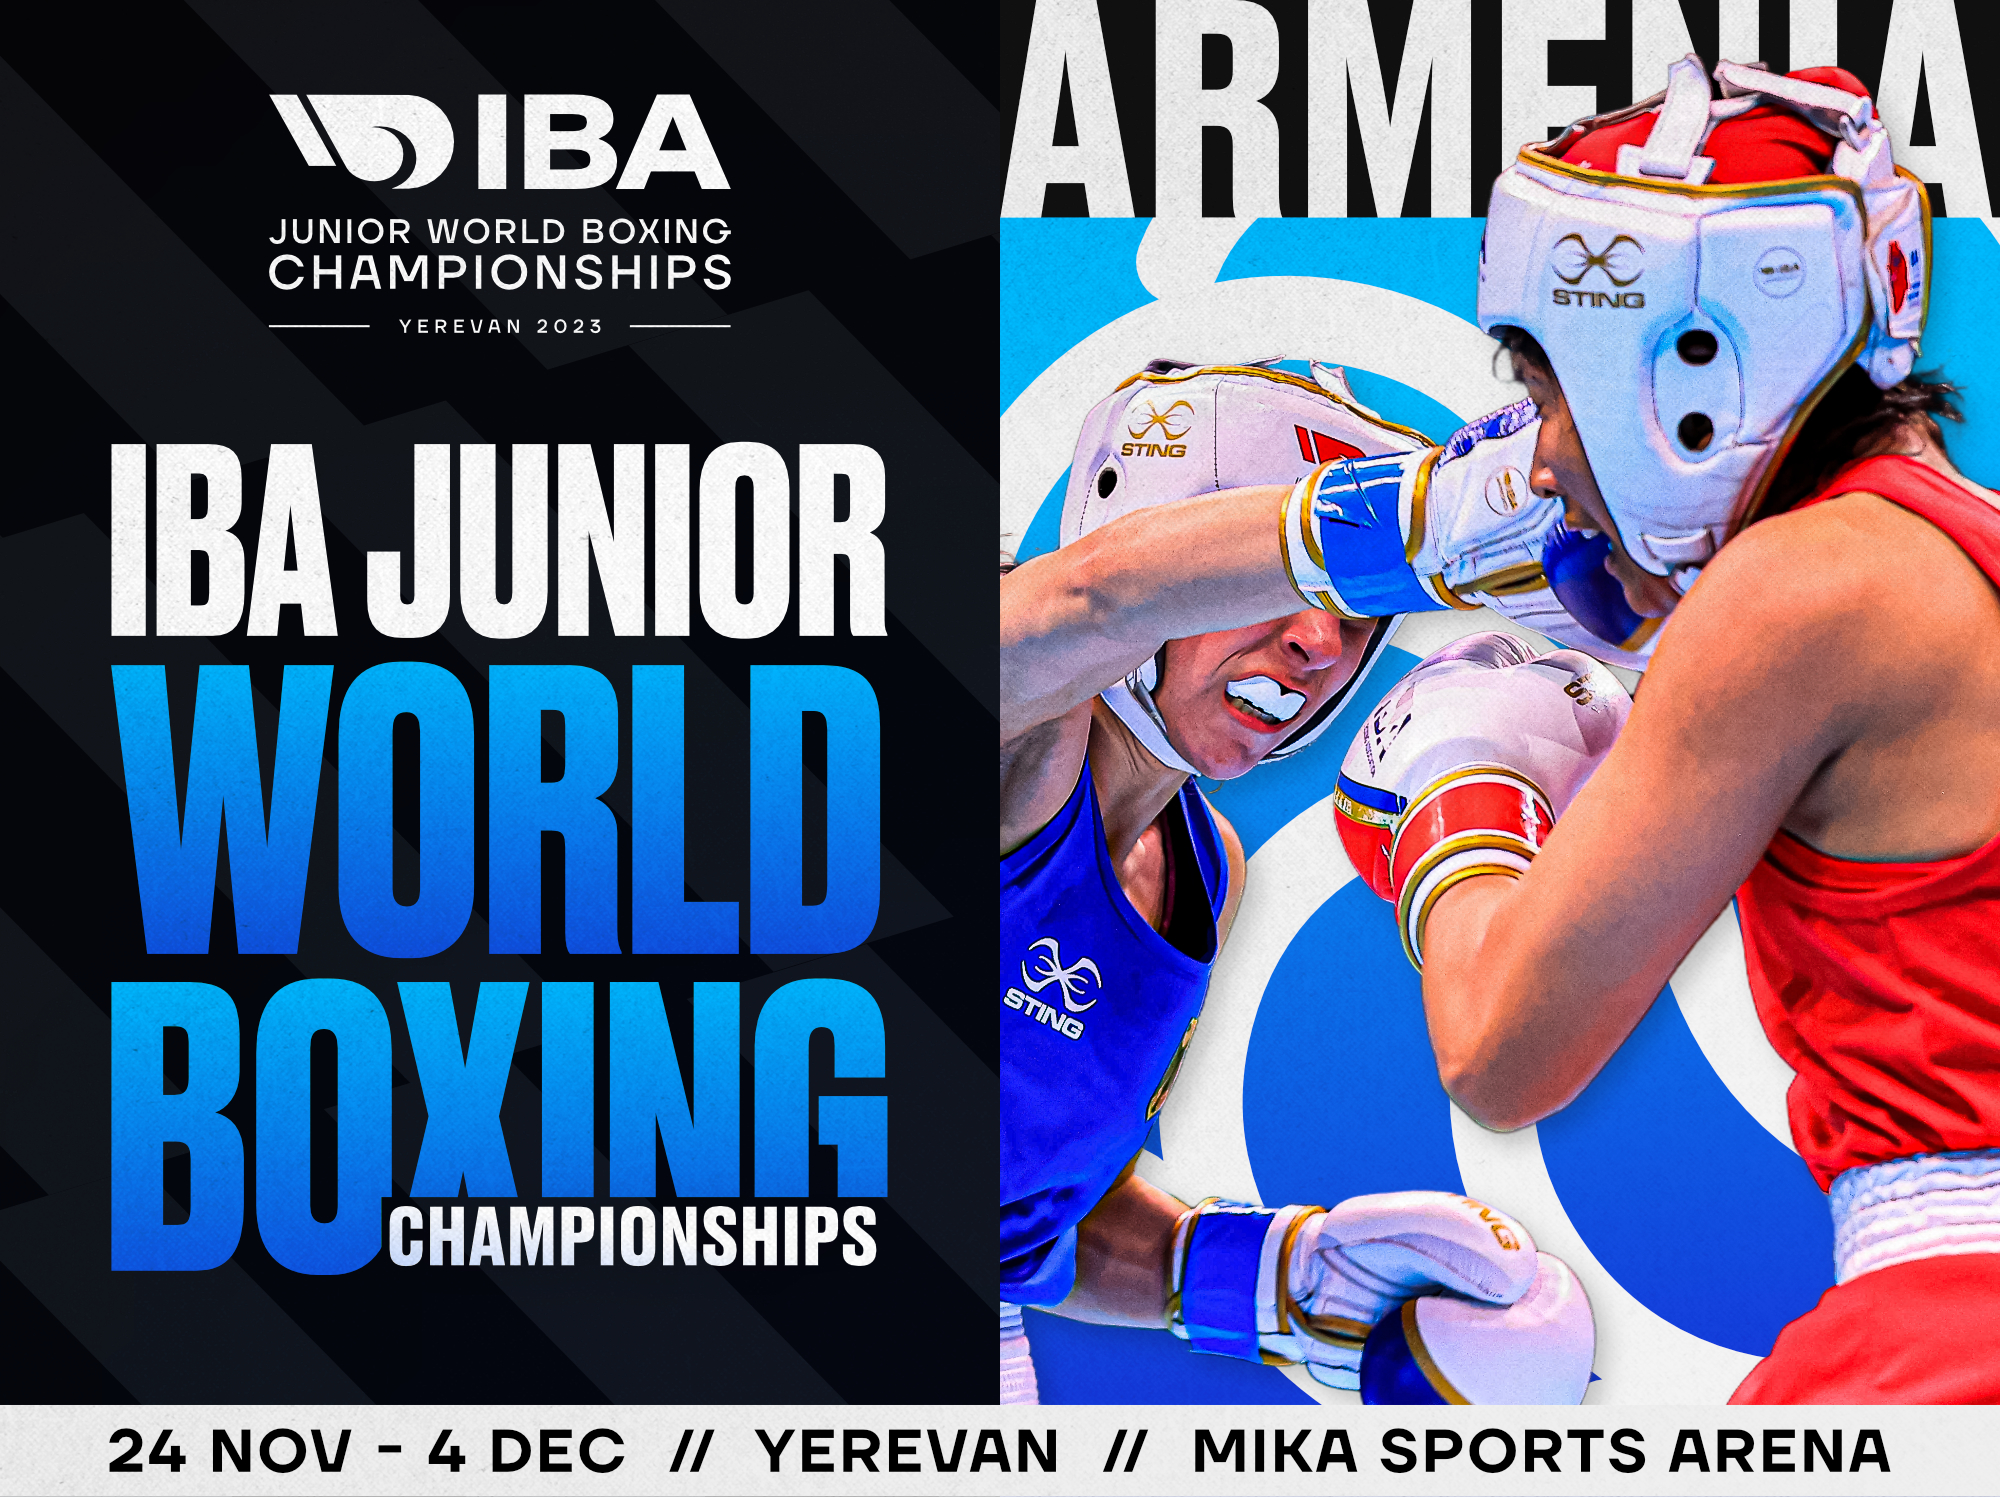 IBA Junior World Boxing Championships Yerevan 2023